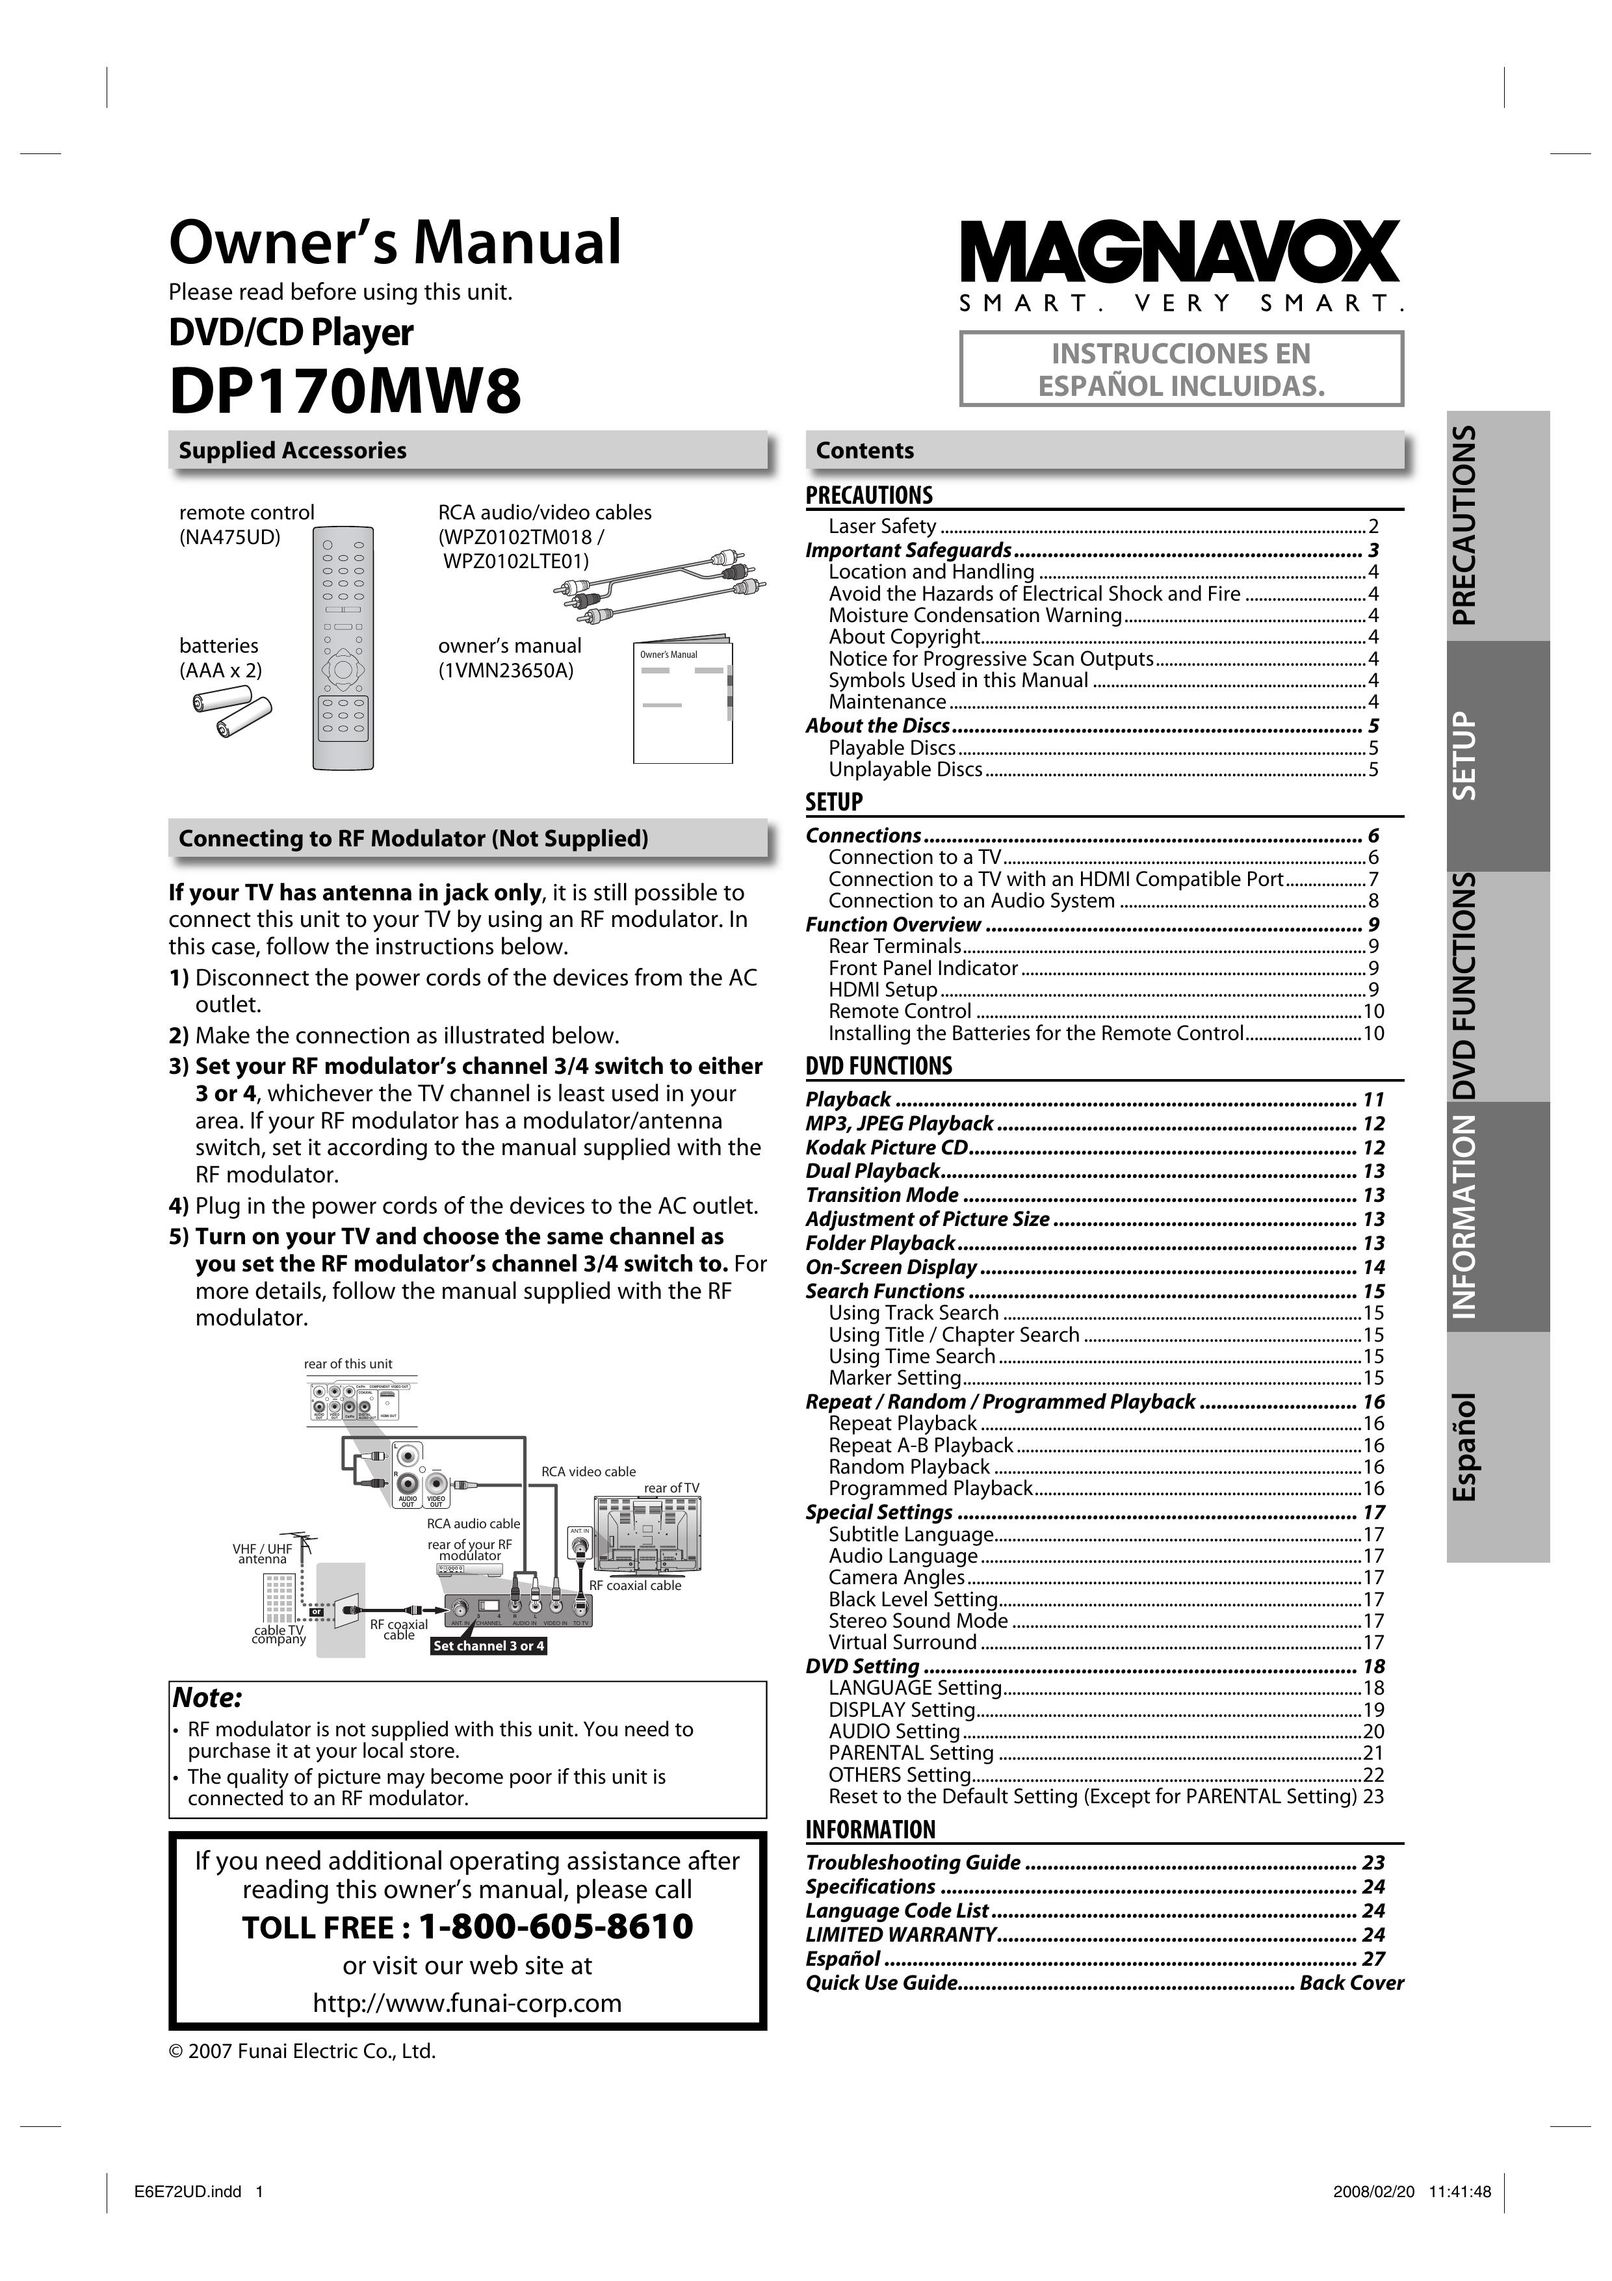 Magnavox DP170MW8 DVD Player User Manual